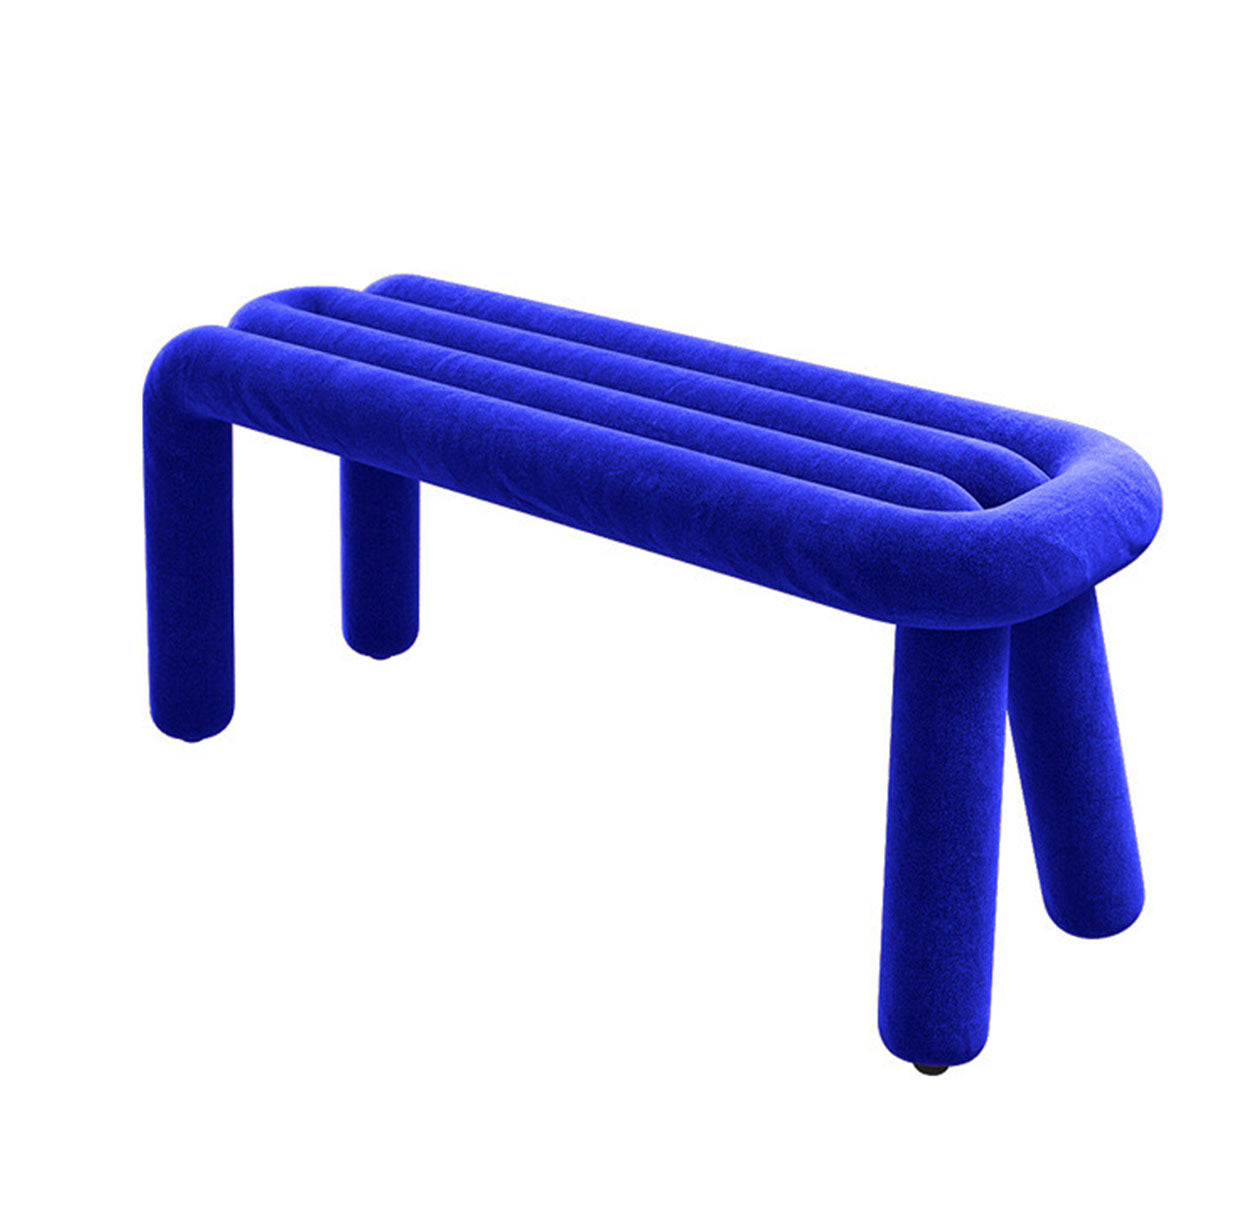 The Blue Contemporary Bench